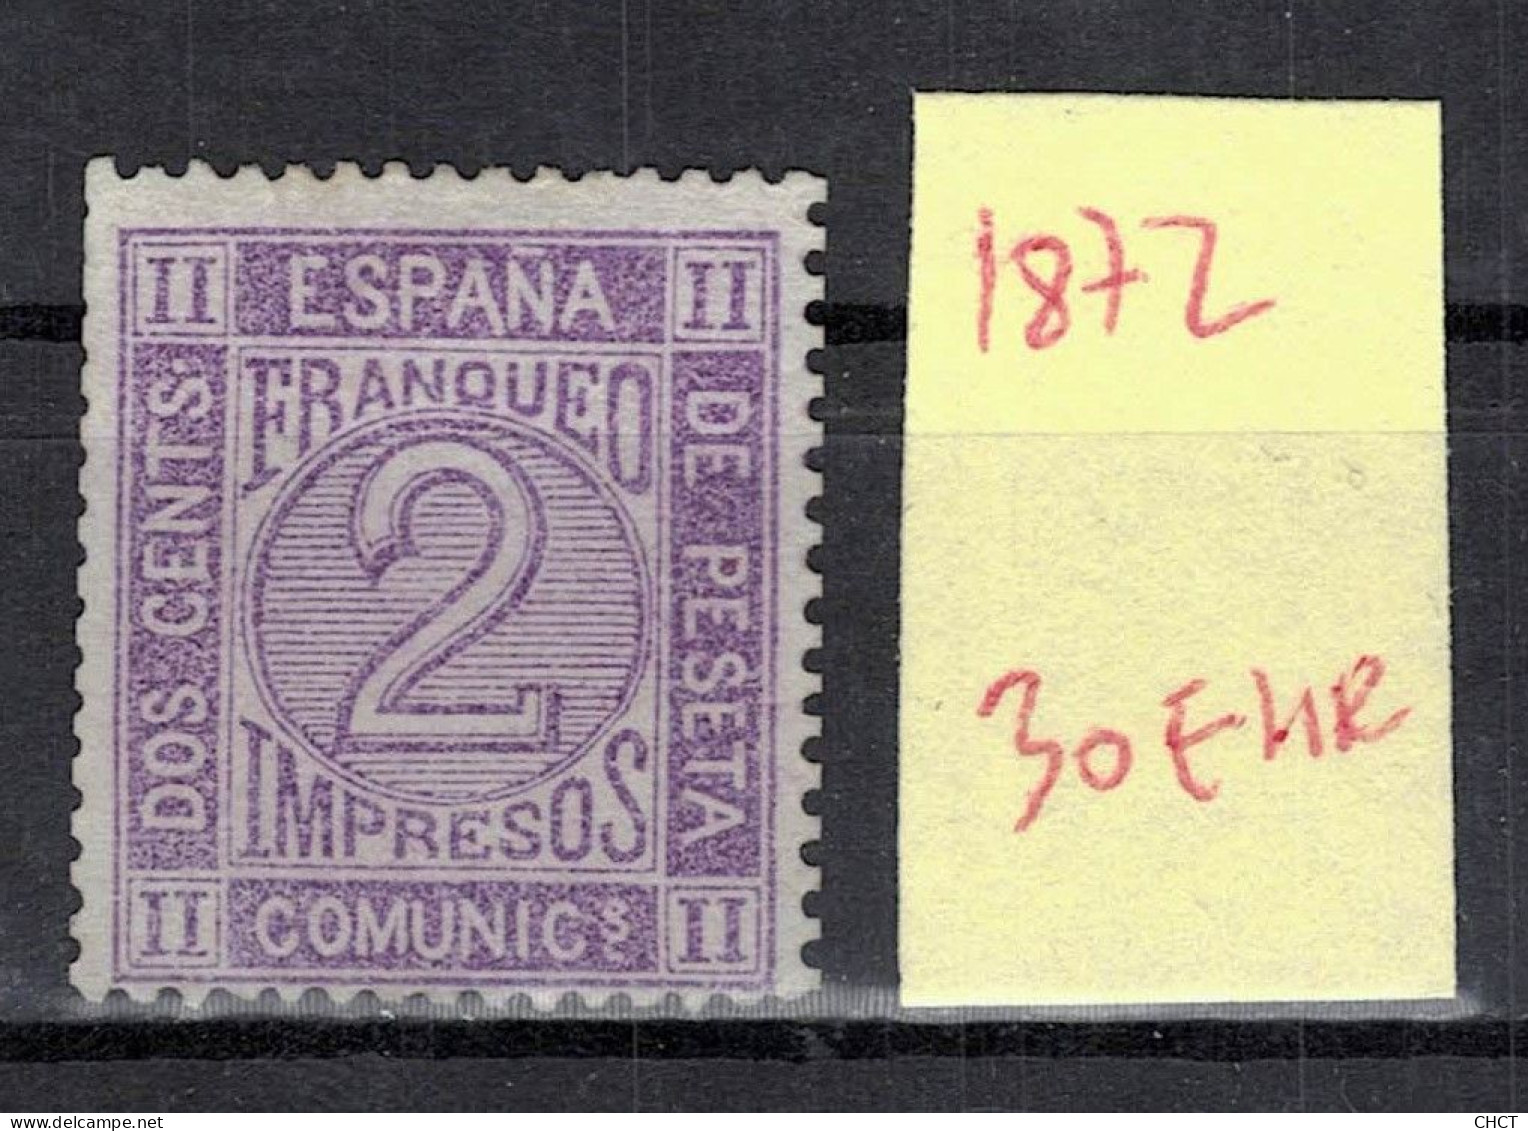 CHCT58 - Franqueo, 1872, MH, Spain - Nuevos